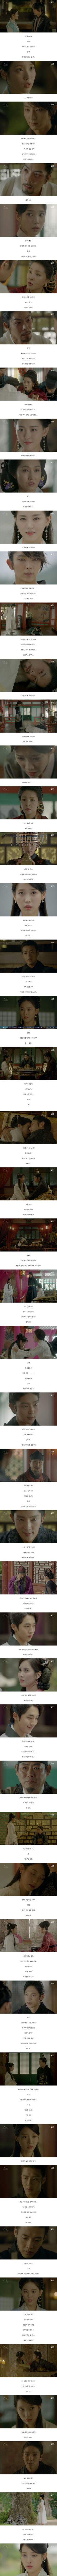 episode 17 captures for the Korean drama 'Scarlet Heart: Ryeo'